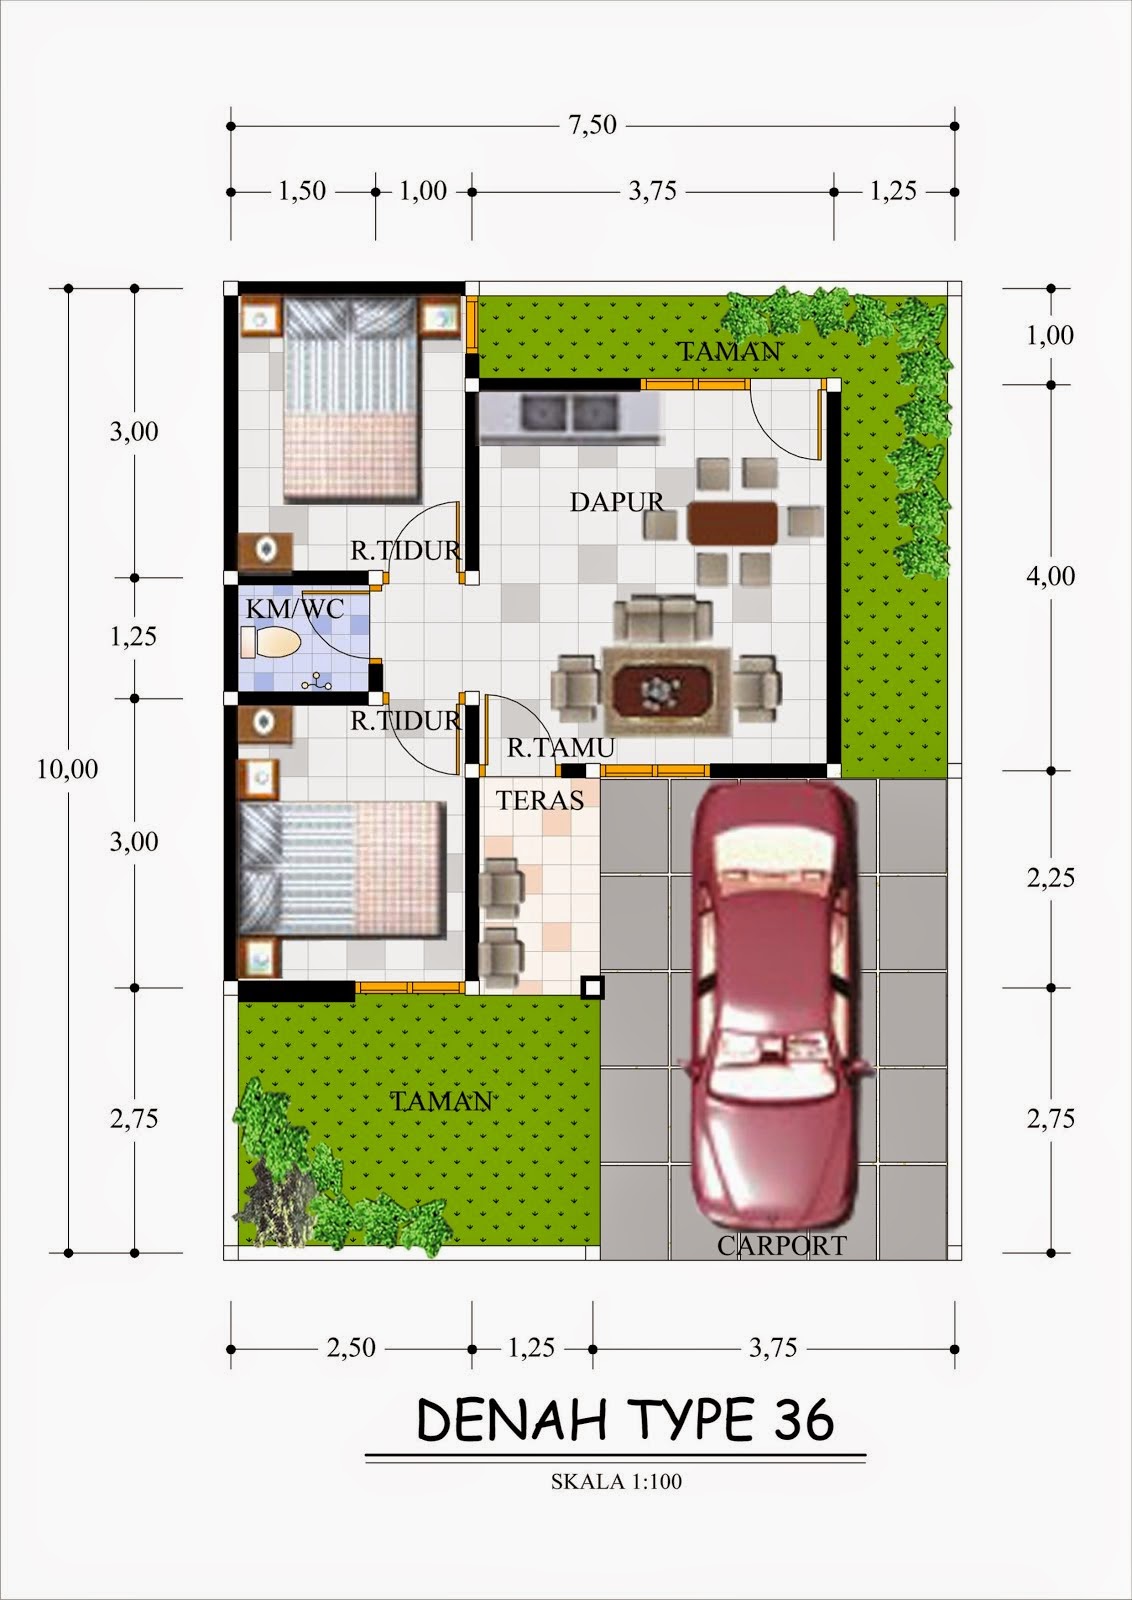 Home Art Design Modern Minimalist Home Design 2020